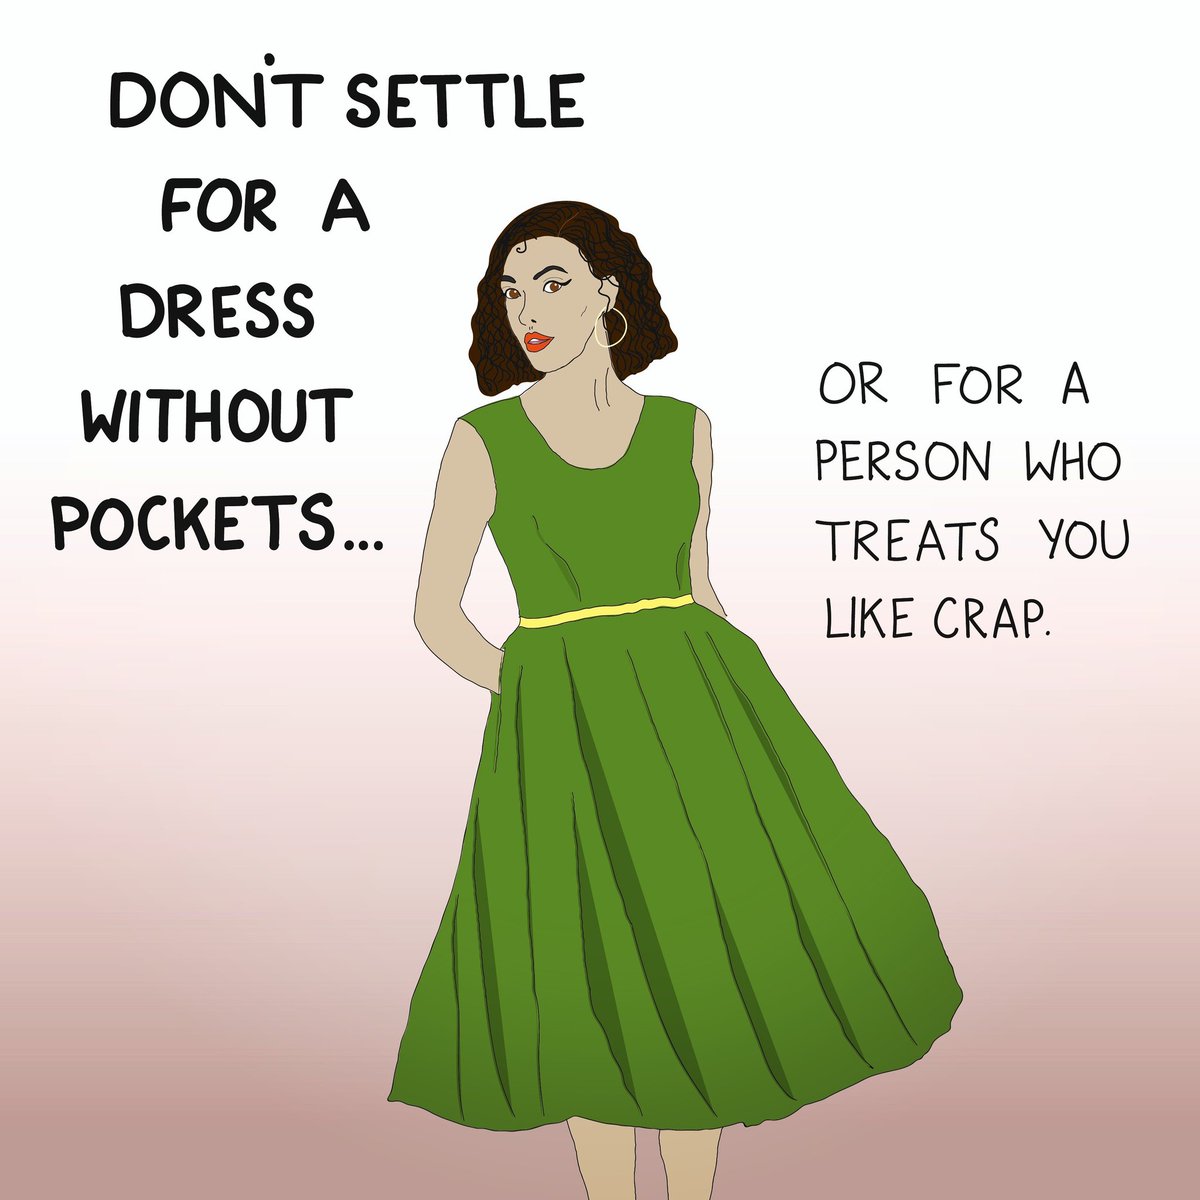 Rules to live by.

#dresswithpockets #loveyourself
#neversettleforlessthanyoudeserve #illustration #digitaldrawing #huiontablet #adobeillustrator #dailydrawing #womenofillustration #ladieswhodraw